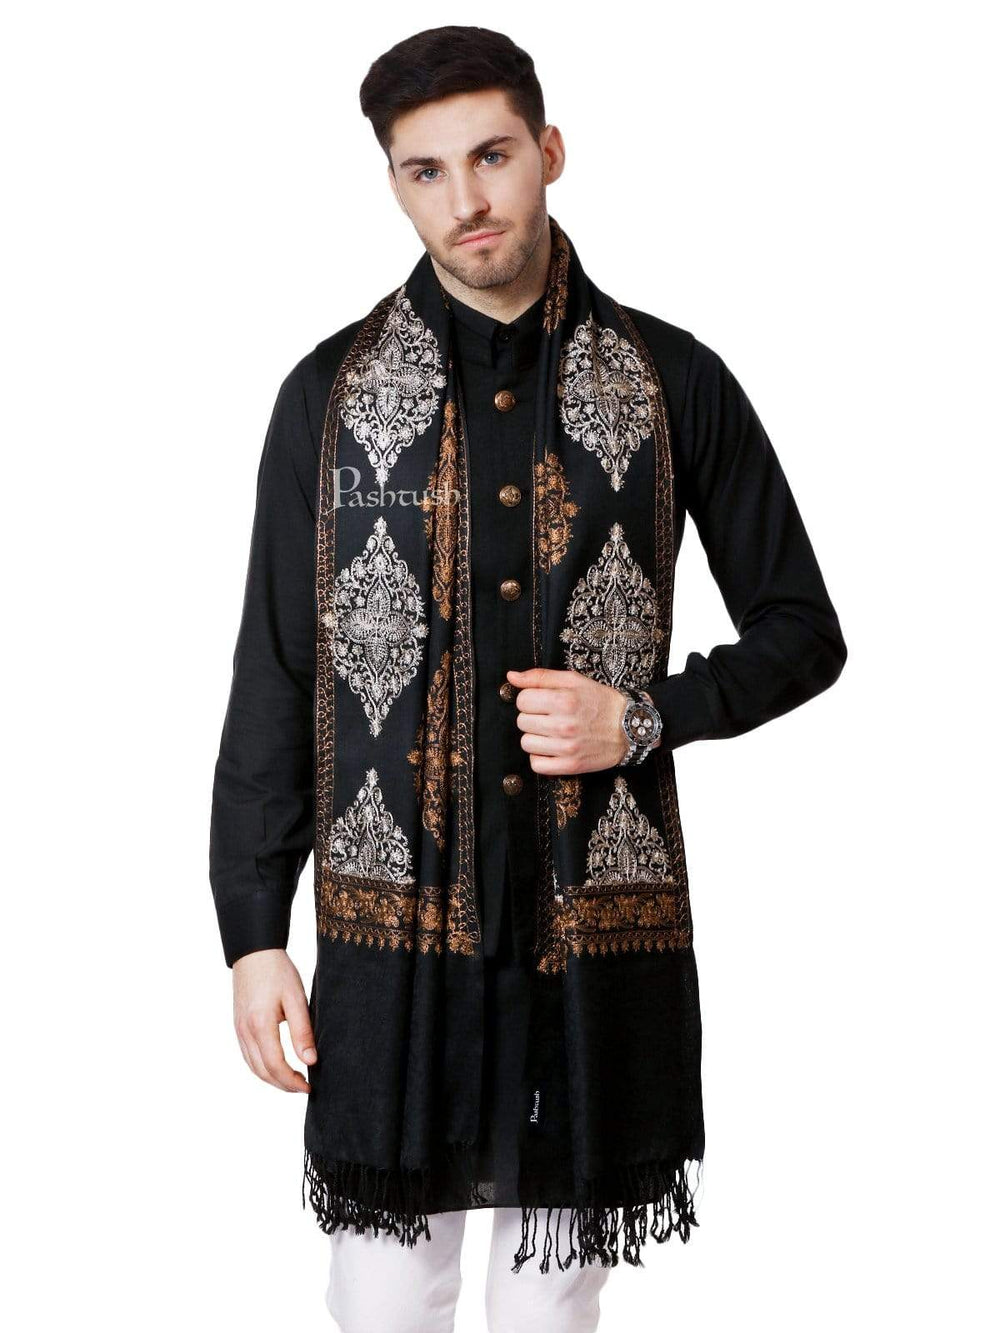 Pashtush India 70x200 Pashtush Mens Fine Wool, Silky Embroidery Needlework Stole, Black